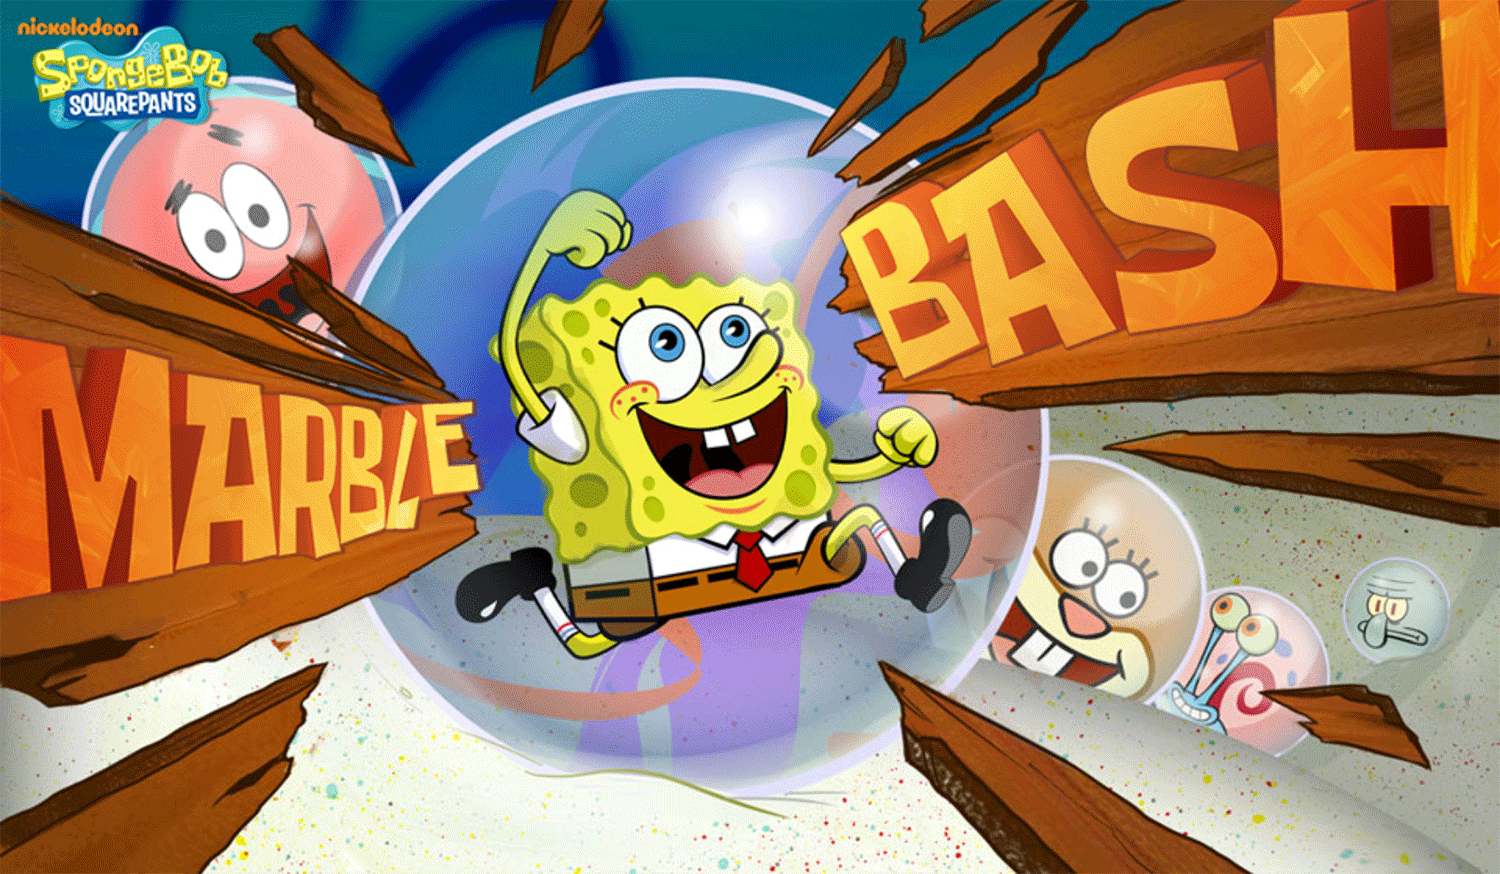 Spongebob Squarepants Marble Bash Welcome Screen Screenshot.